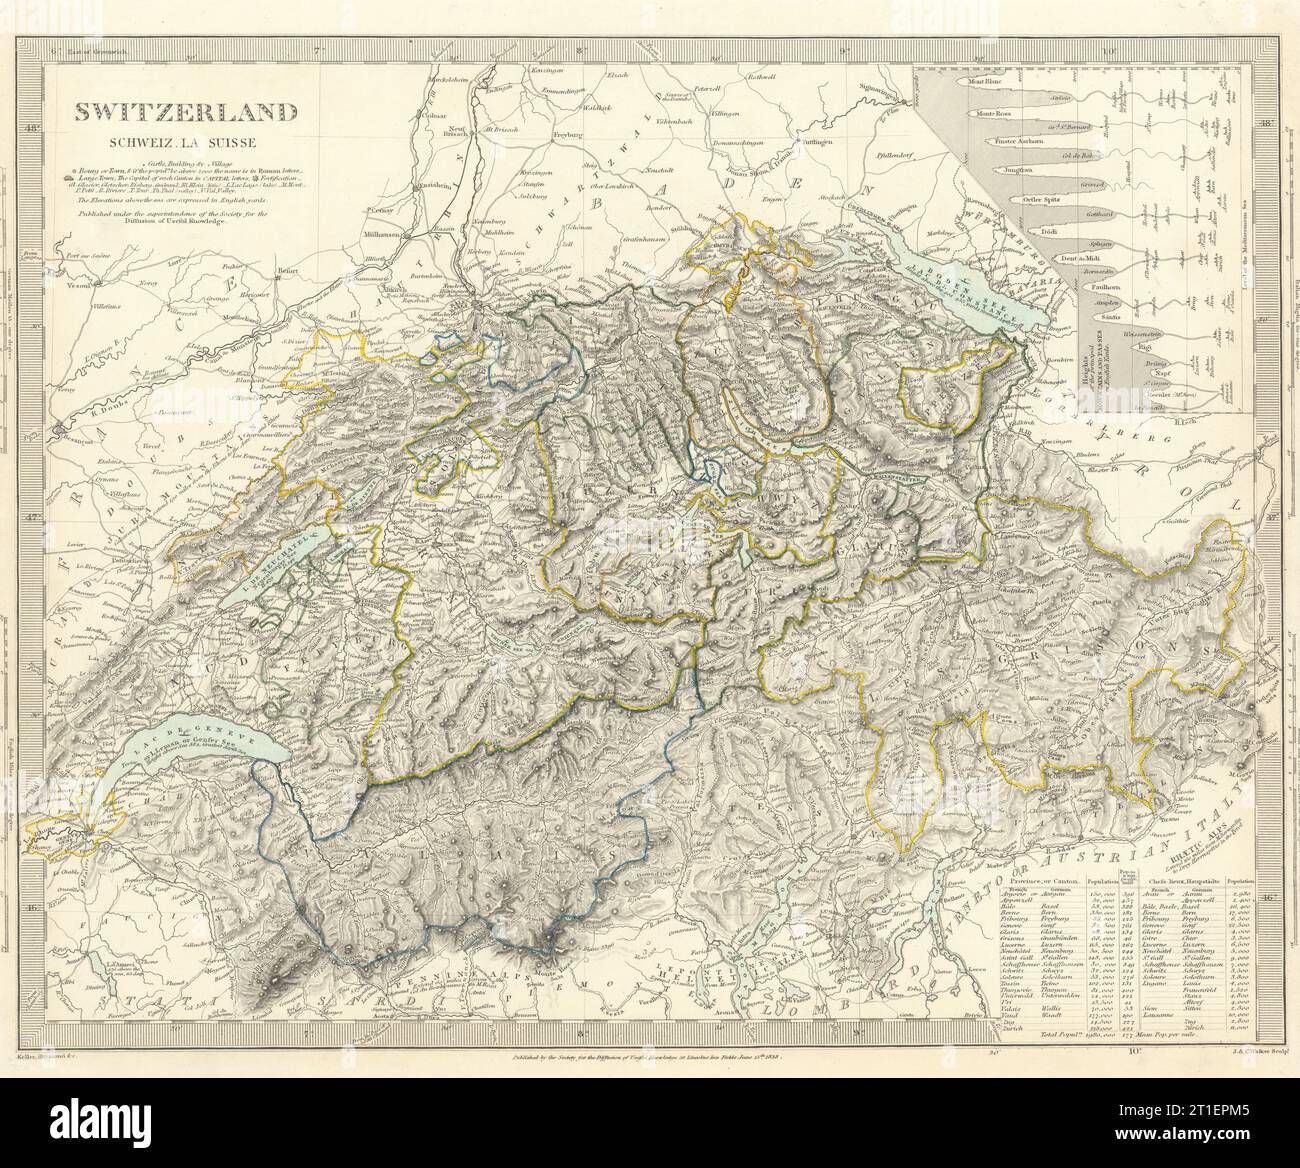 SWITZERLAND SCHWEIZ LA SUISSE.Inset heights of mountains, passes.SDUK 1844 map Stock Photo